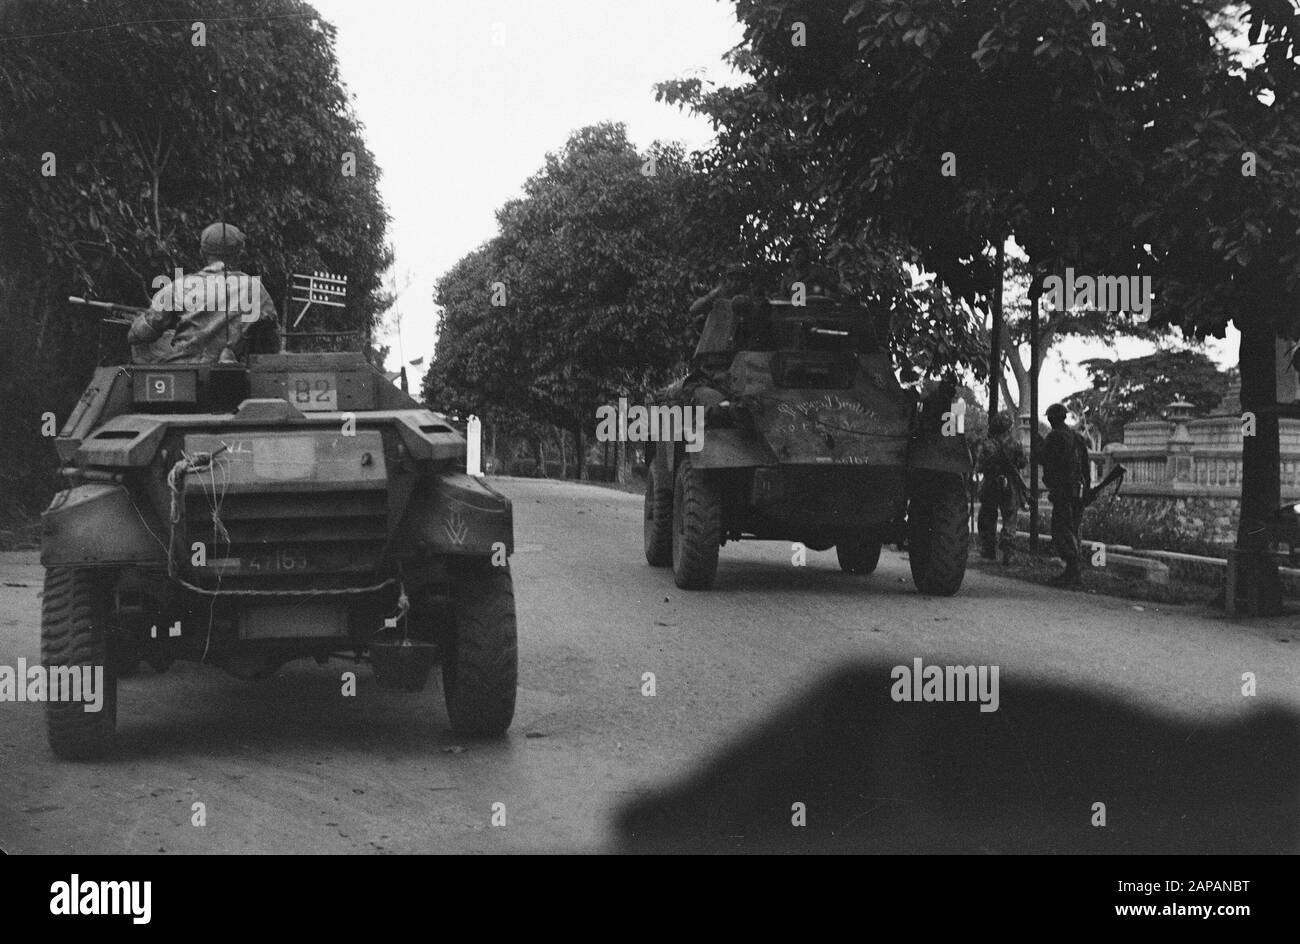 Loeboek Pakem en Baoengan Description: The first armored cars jerk Pematang Siantar within Date: 29 July 1948 Location: Indonesia, Dutch East Indies, Sumatra Stock Photo